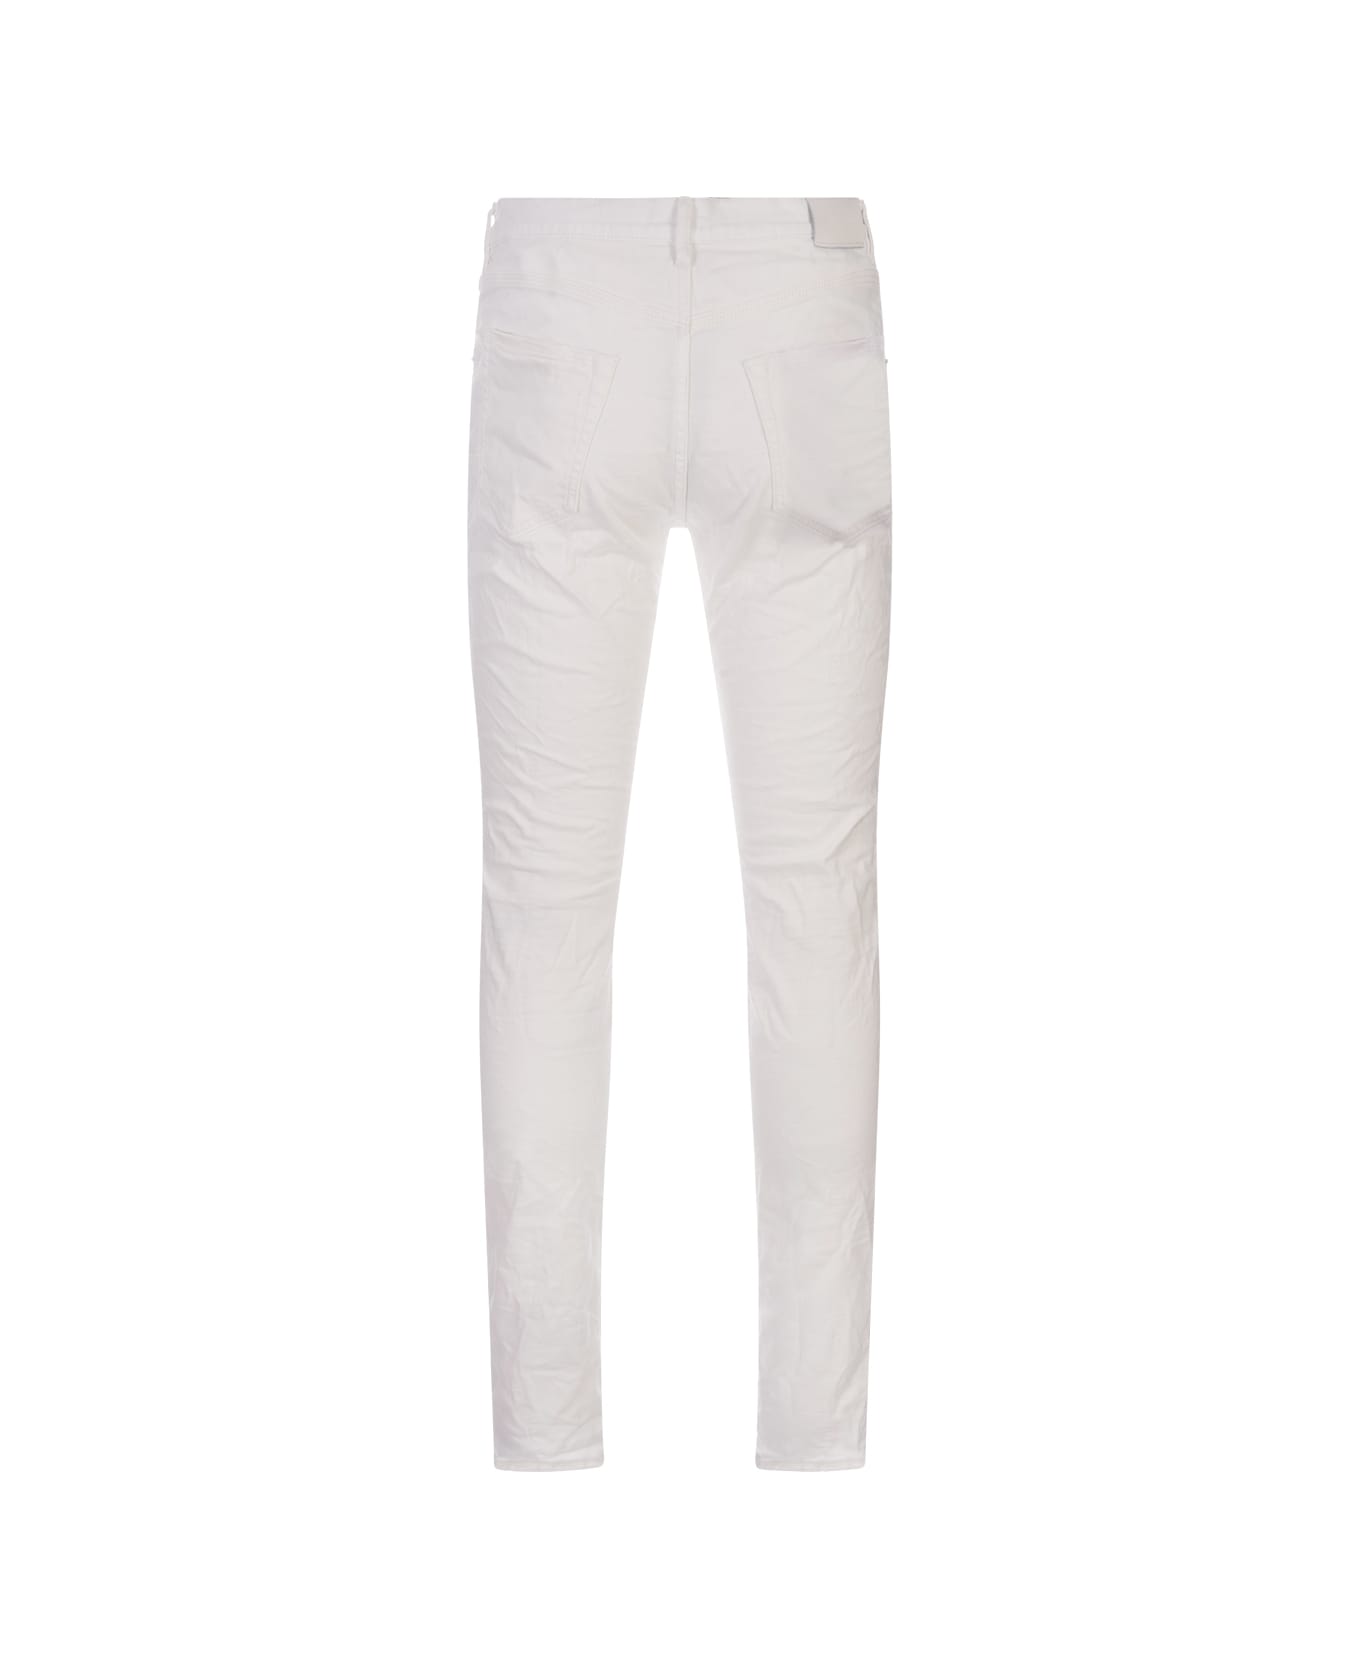 Purple Brand P001 Jacquard Monogram Jeans In White - White ボトムス